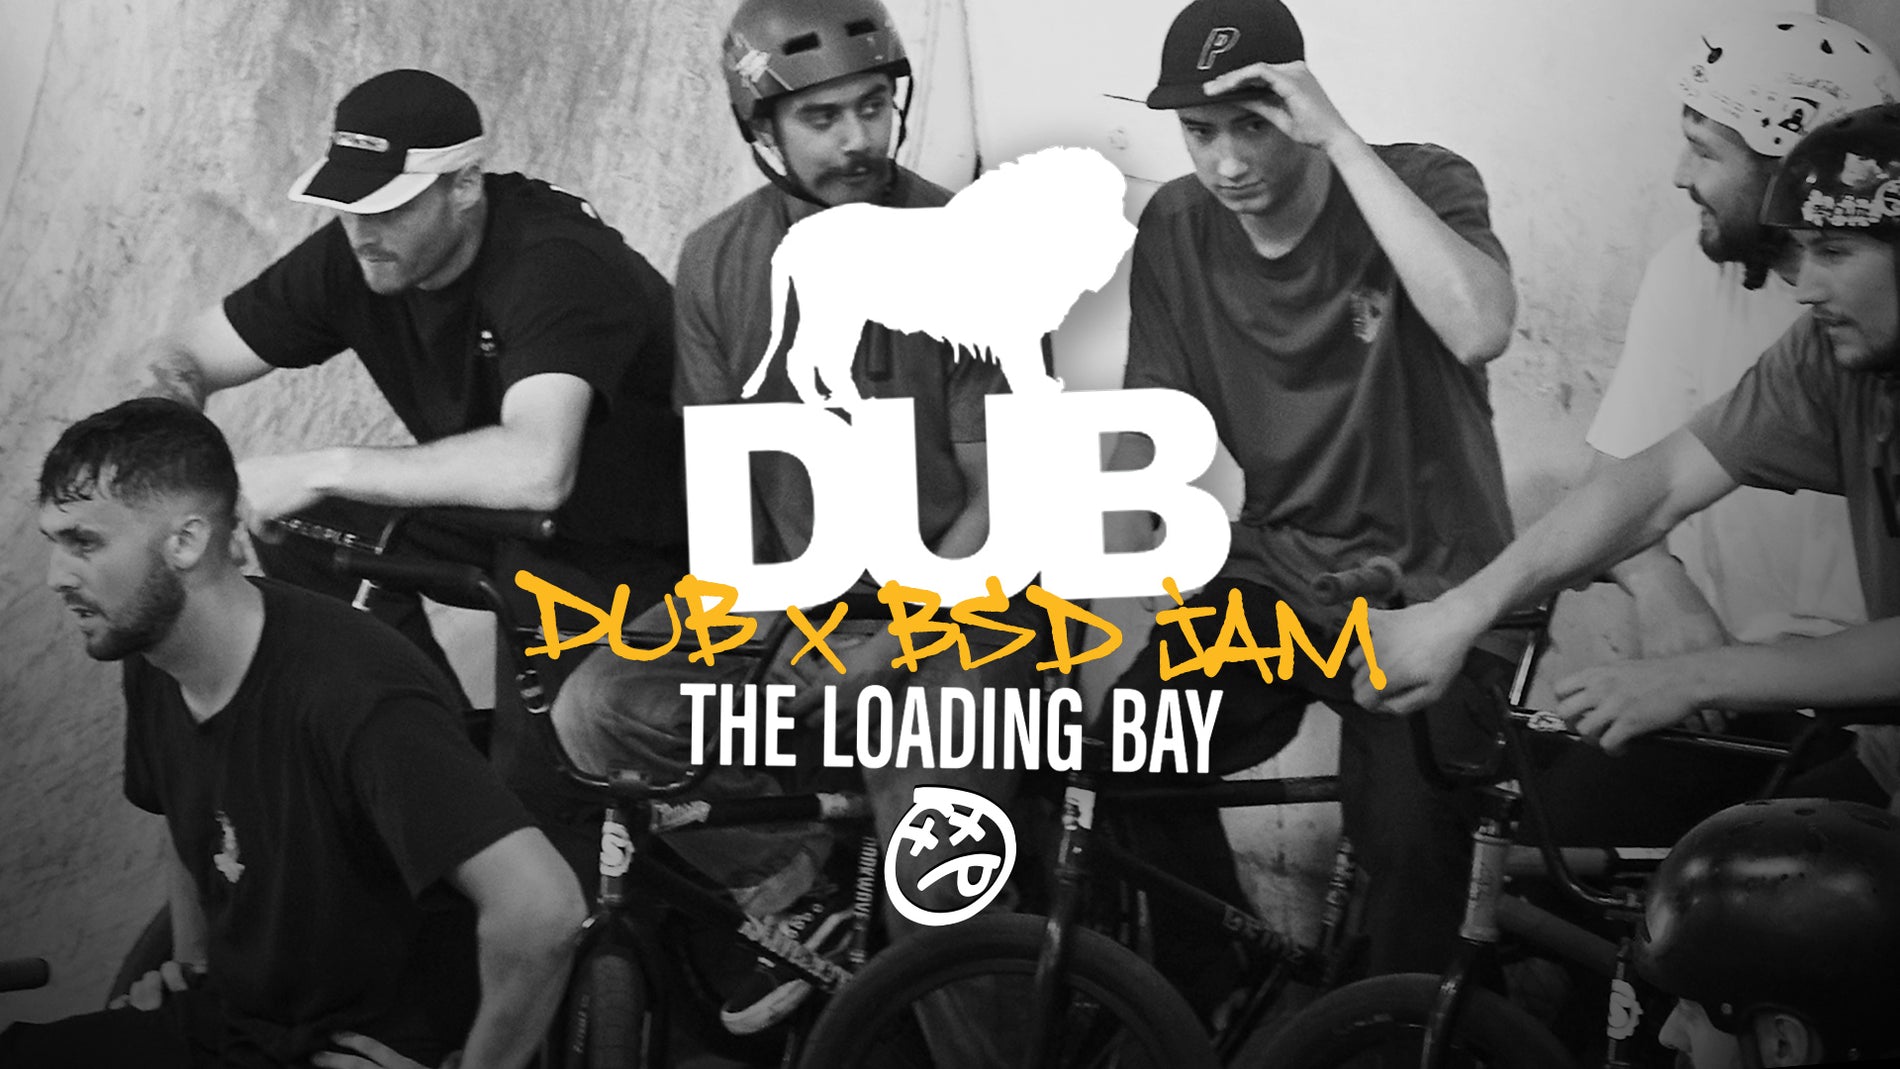 DUB x BSD Loading Bay Jam